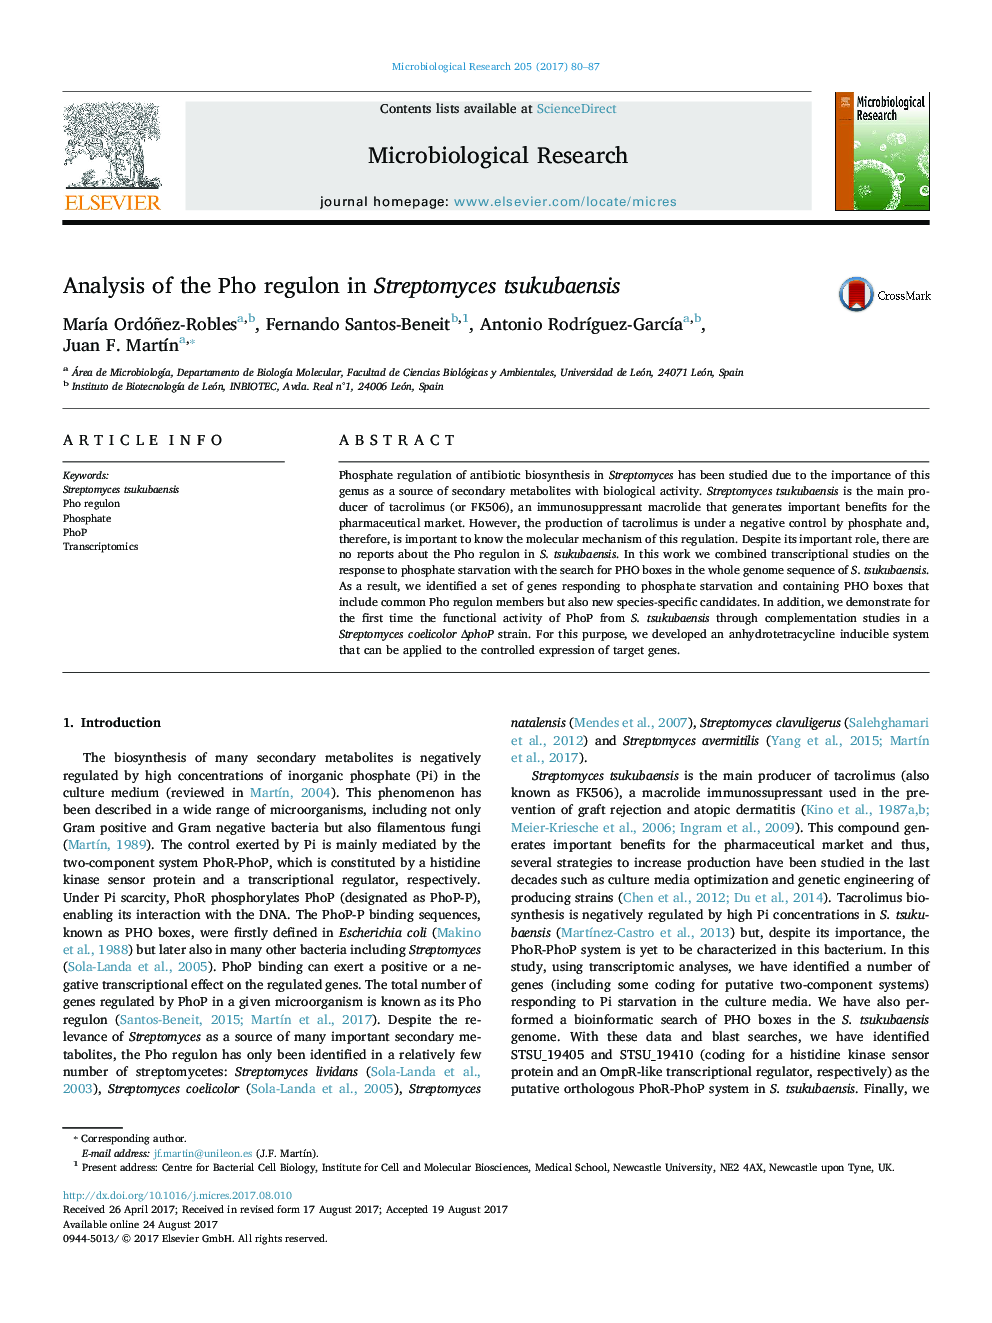 Analysis of the Pho regulon in Streptomyces tsukubaensis